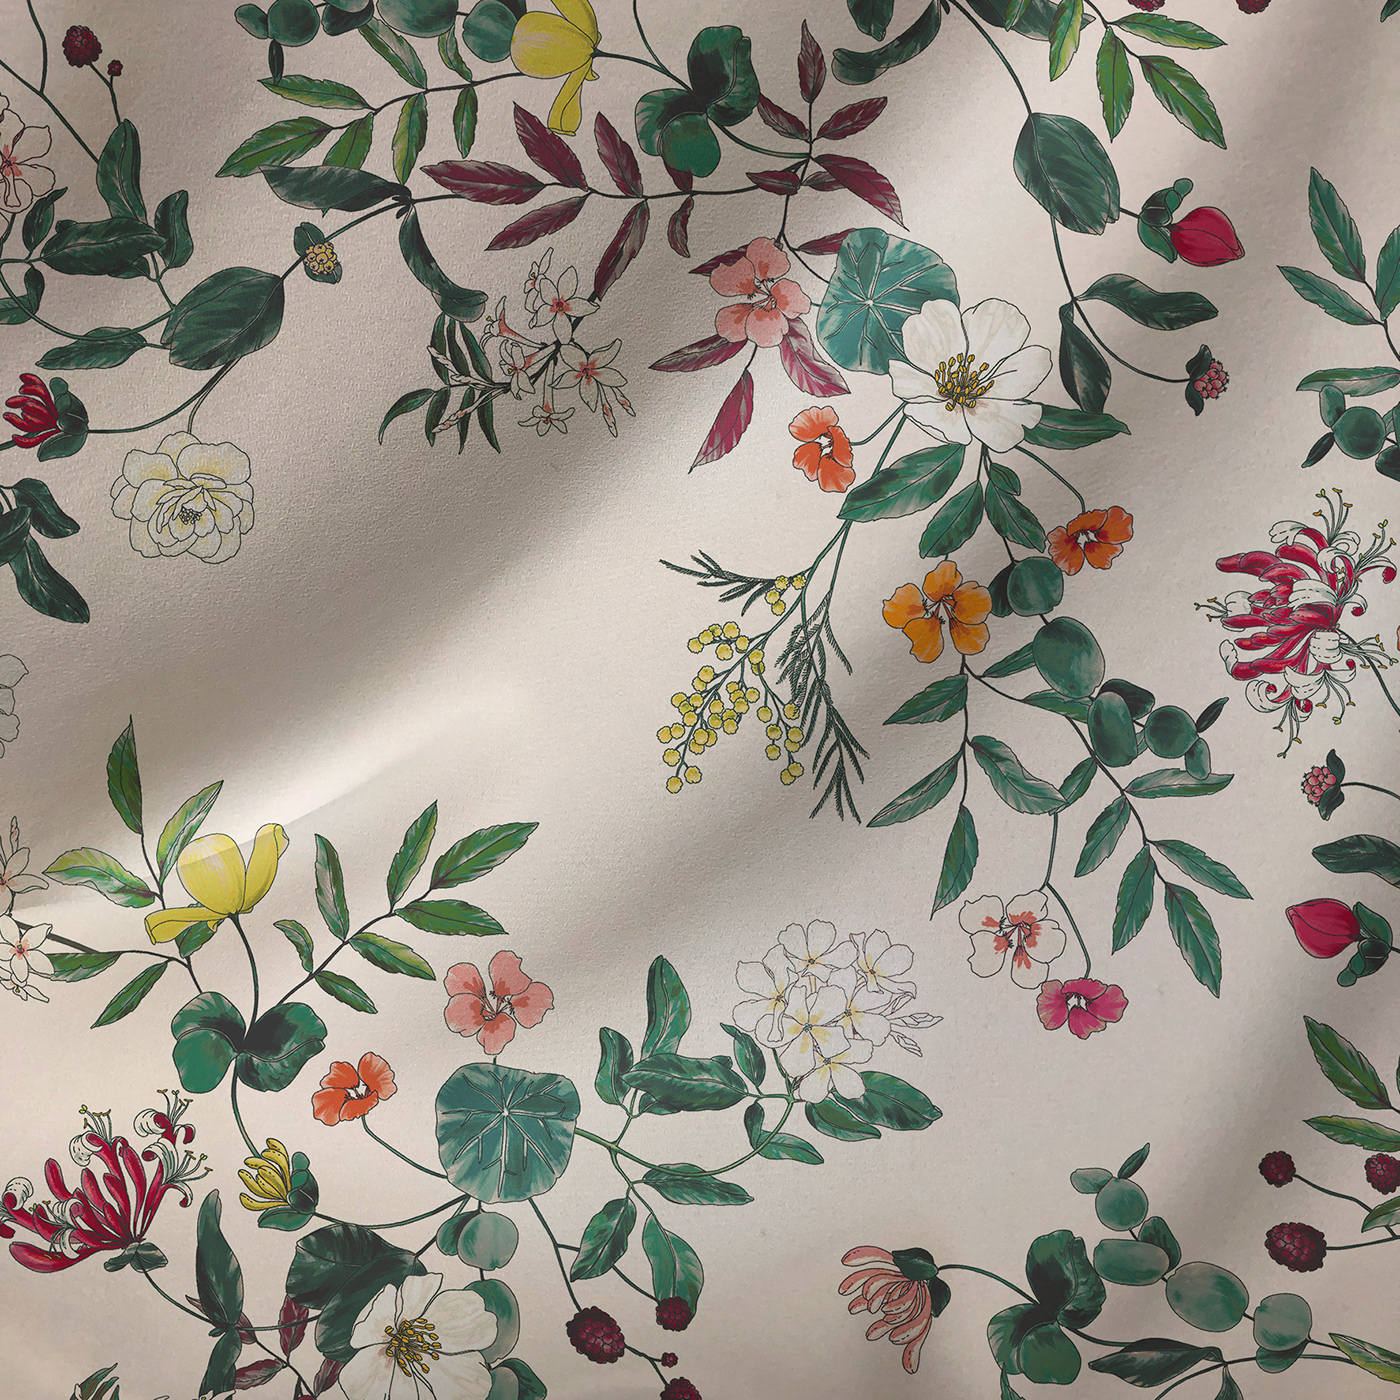 floral textile pattern design